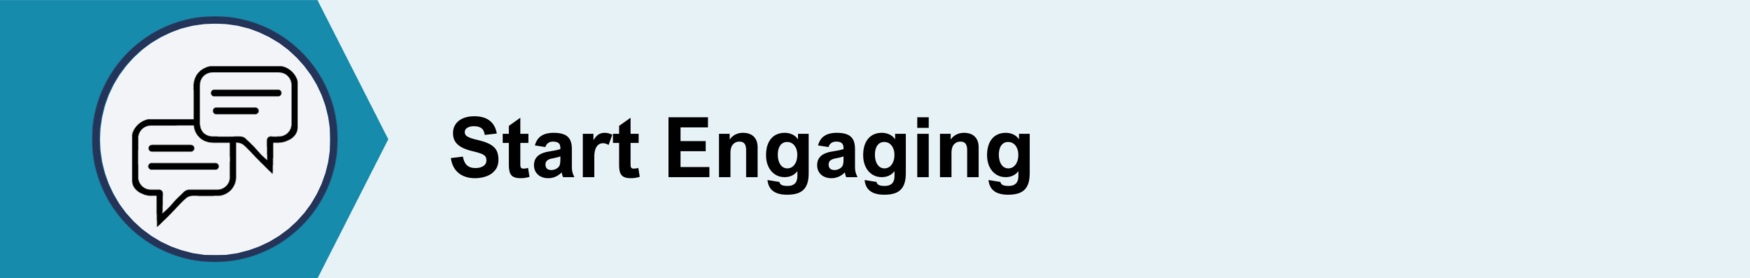 Title: Start Engaging